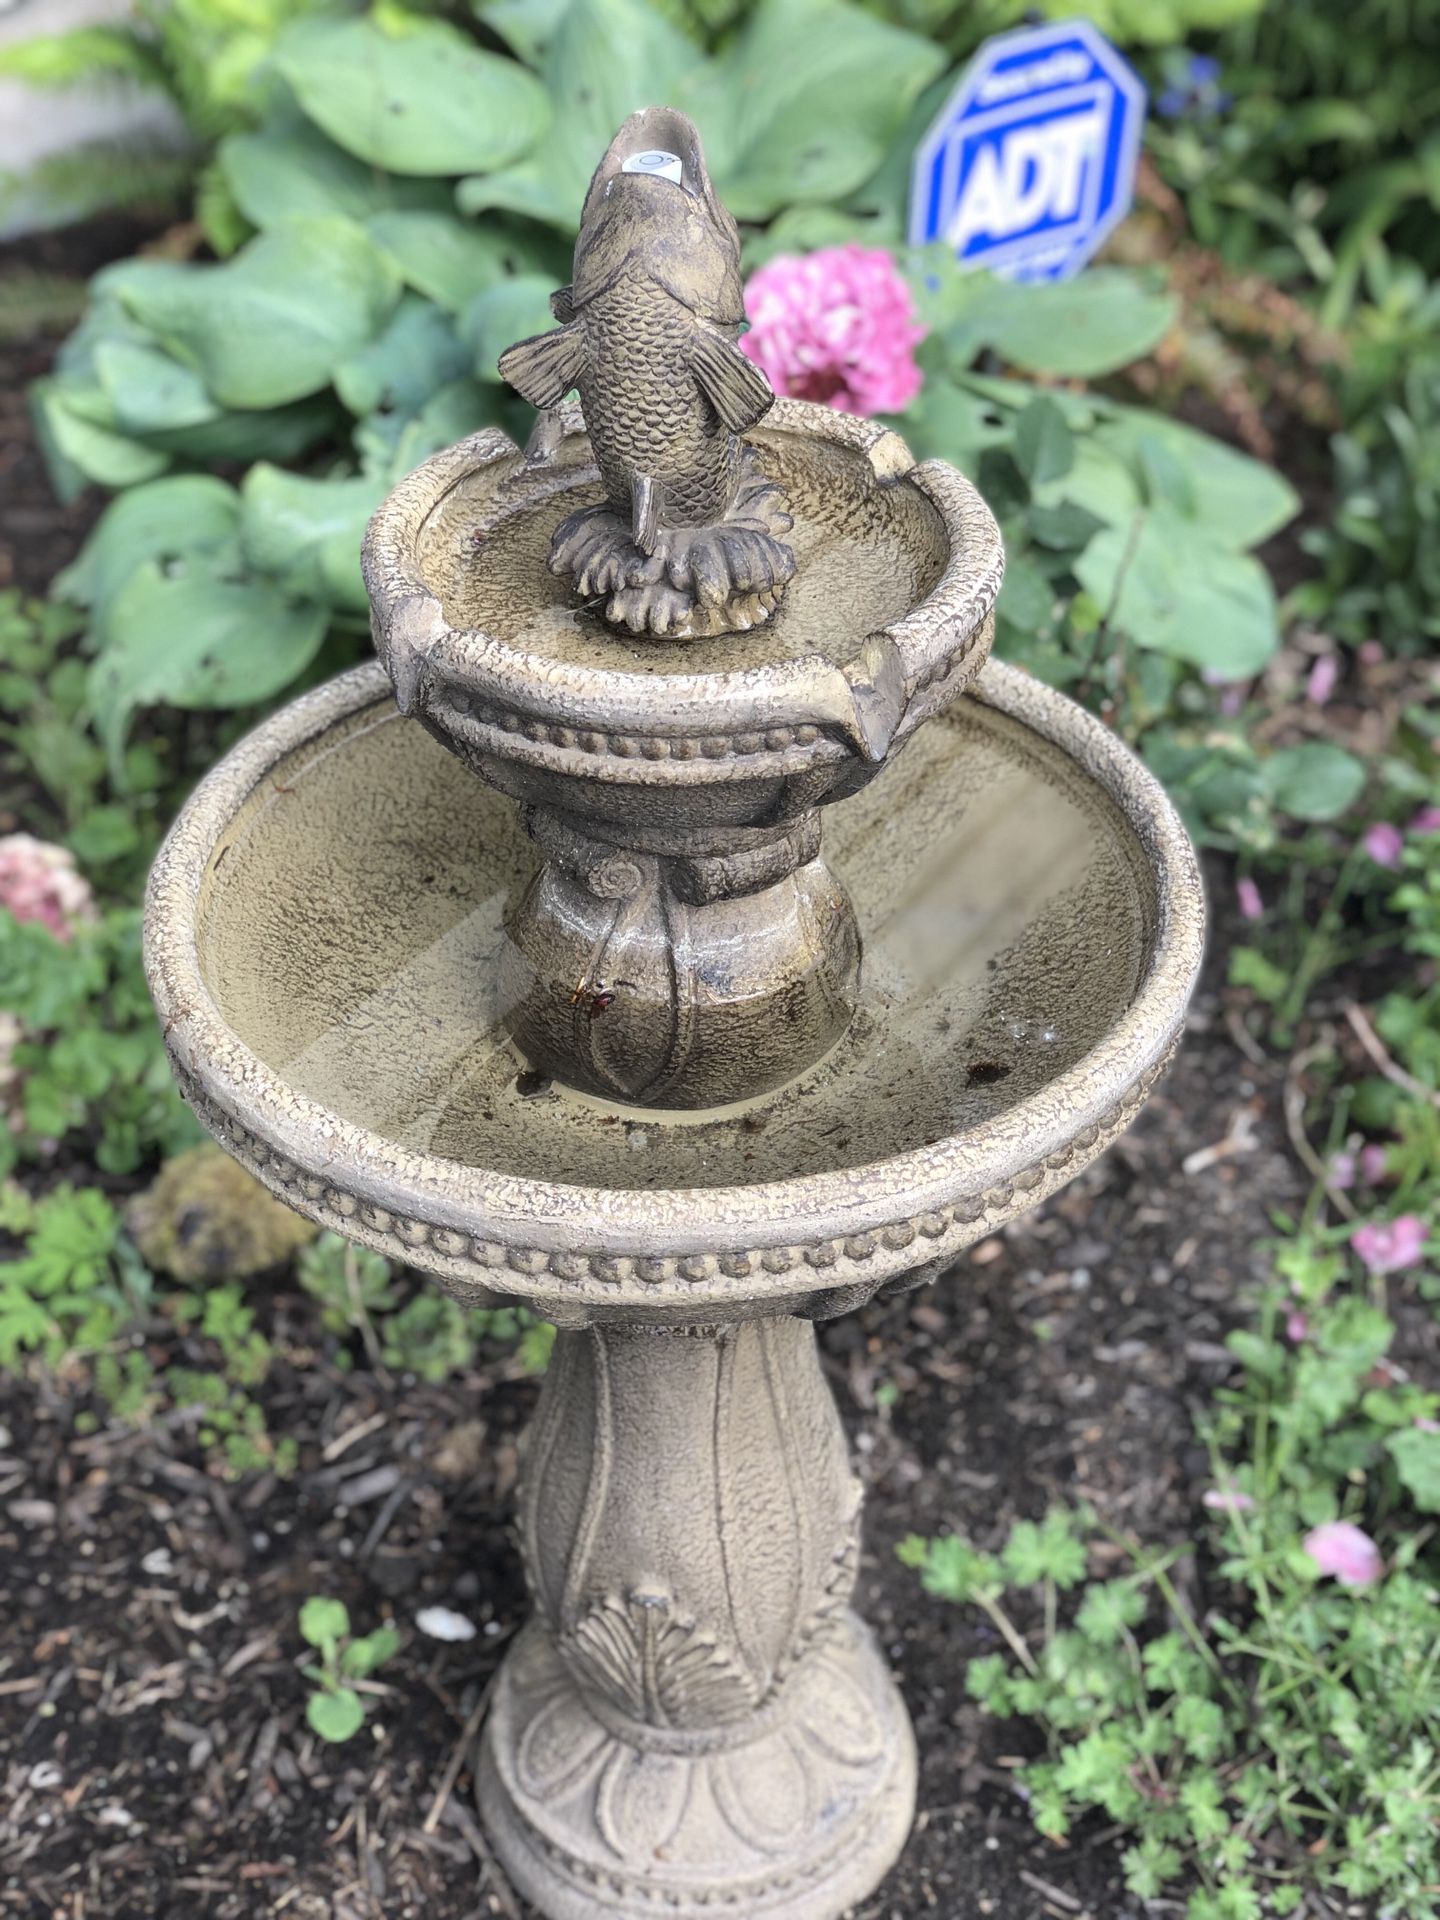 Water fountain